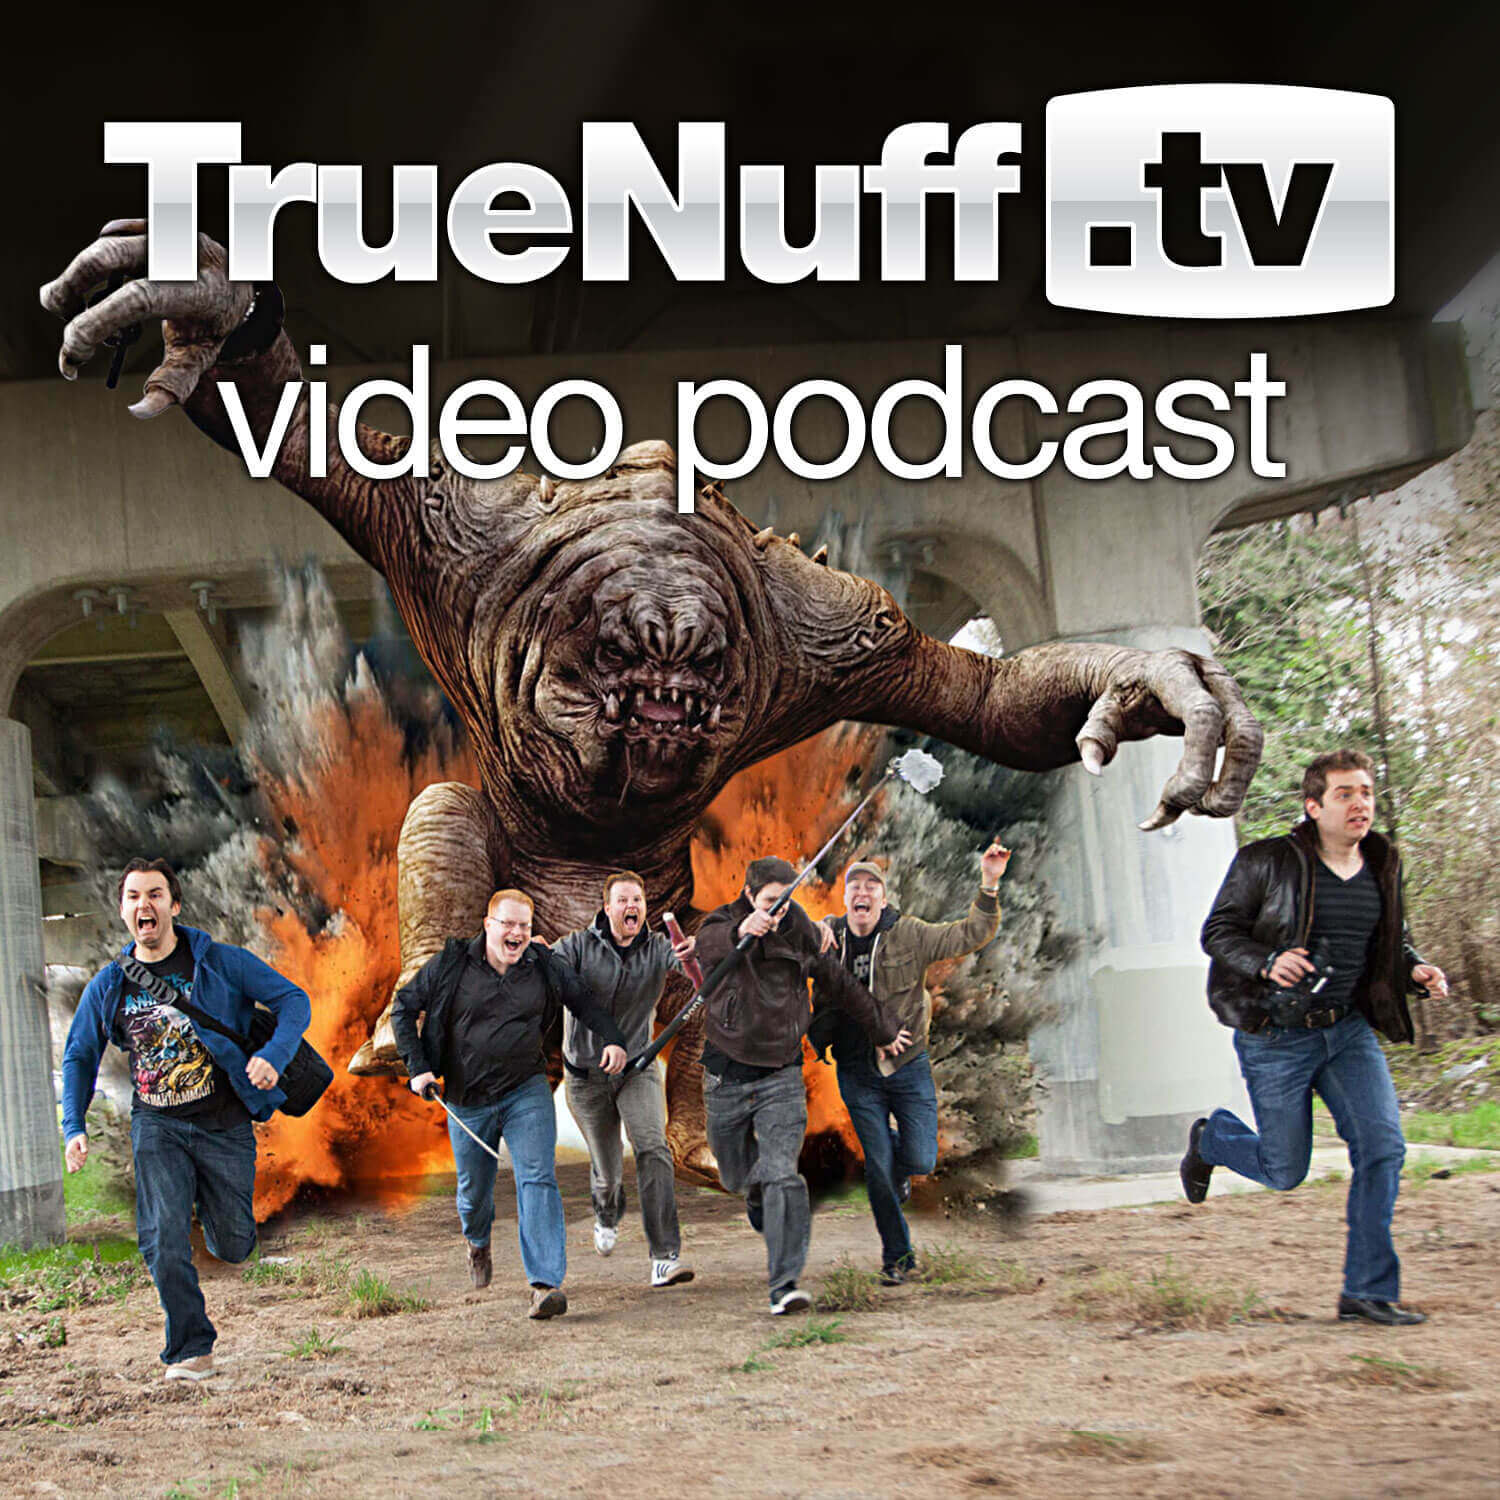 TrueNuff.tv Video Podcast